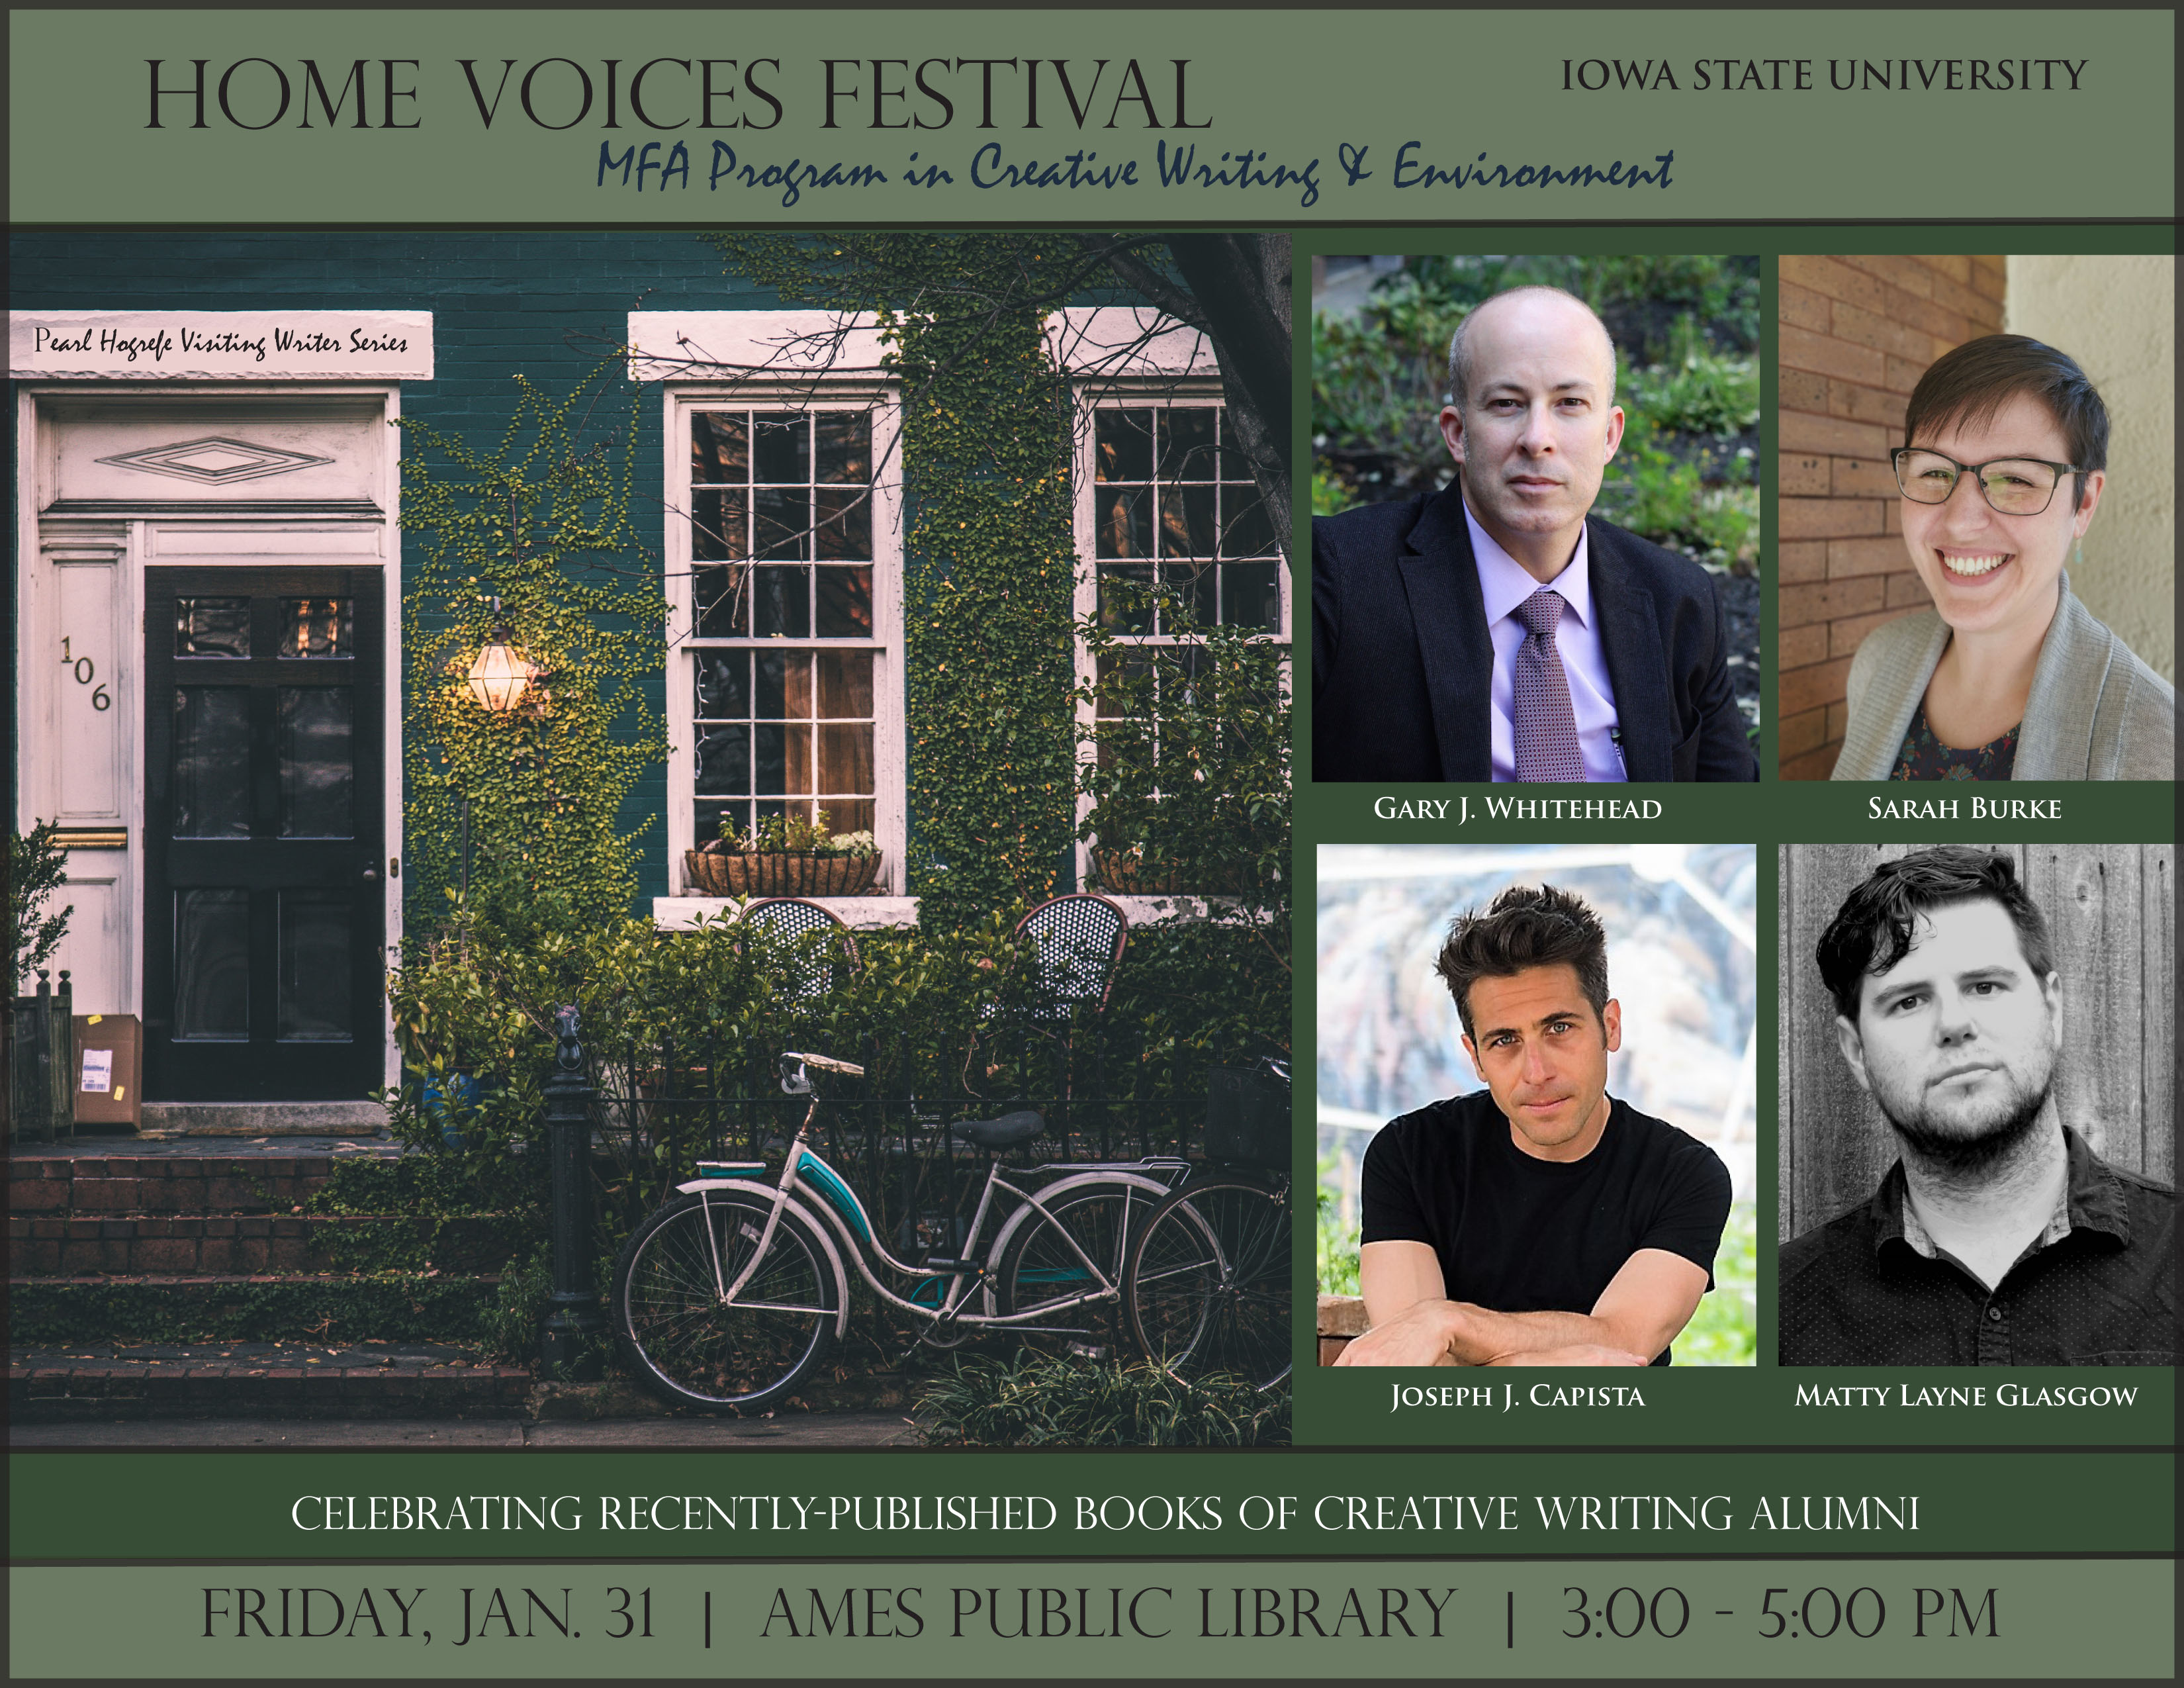 Home Voices Festival flyer (download PDF below)